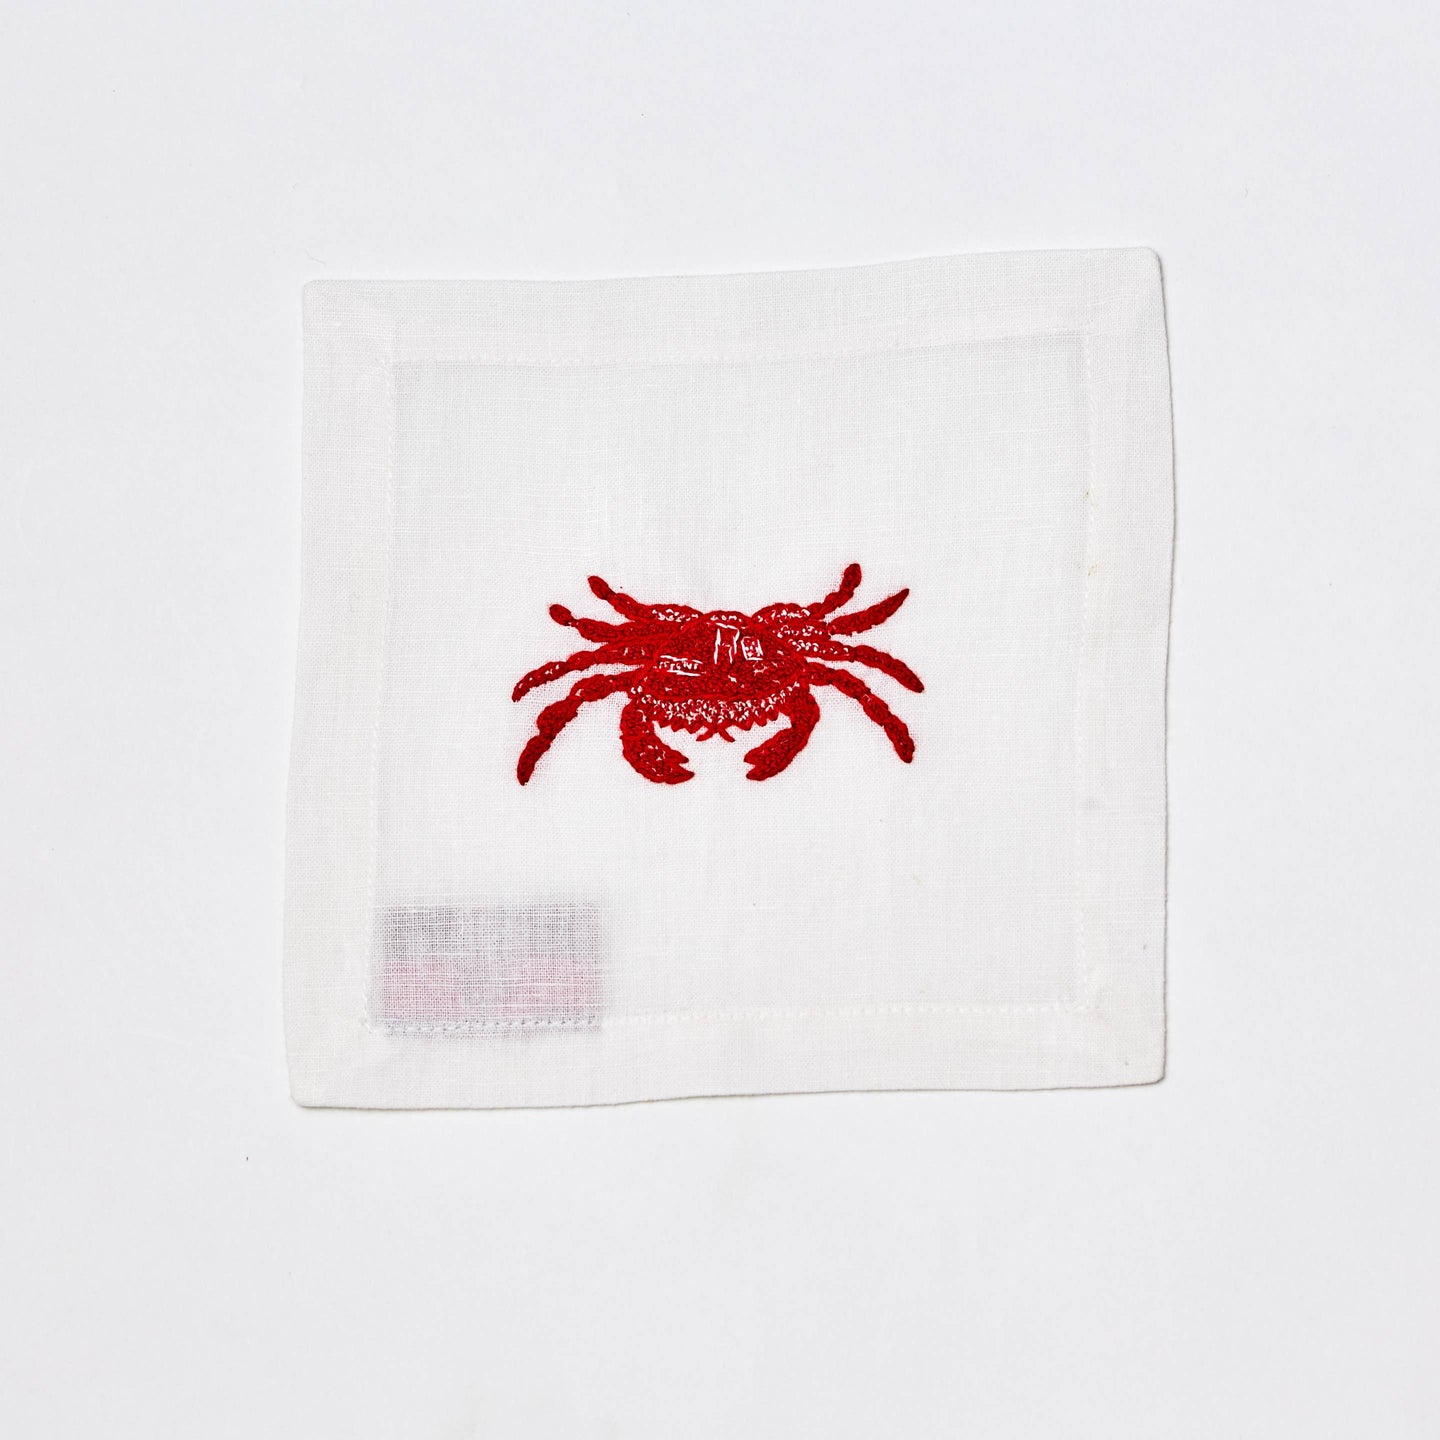 Crab coaster, set of 4, red